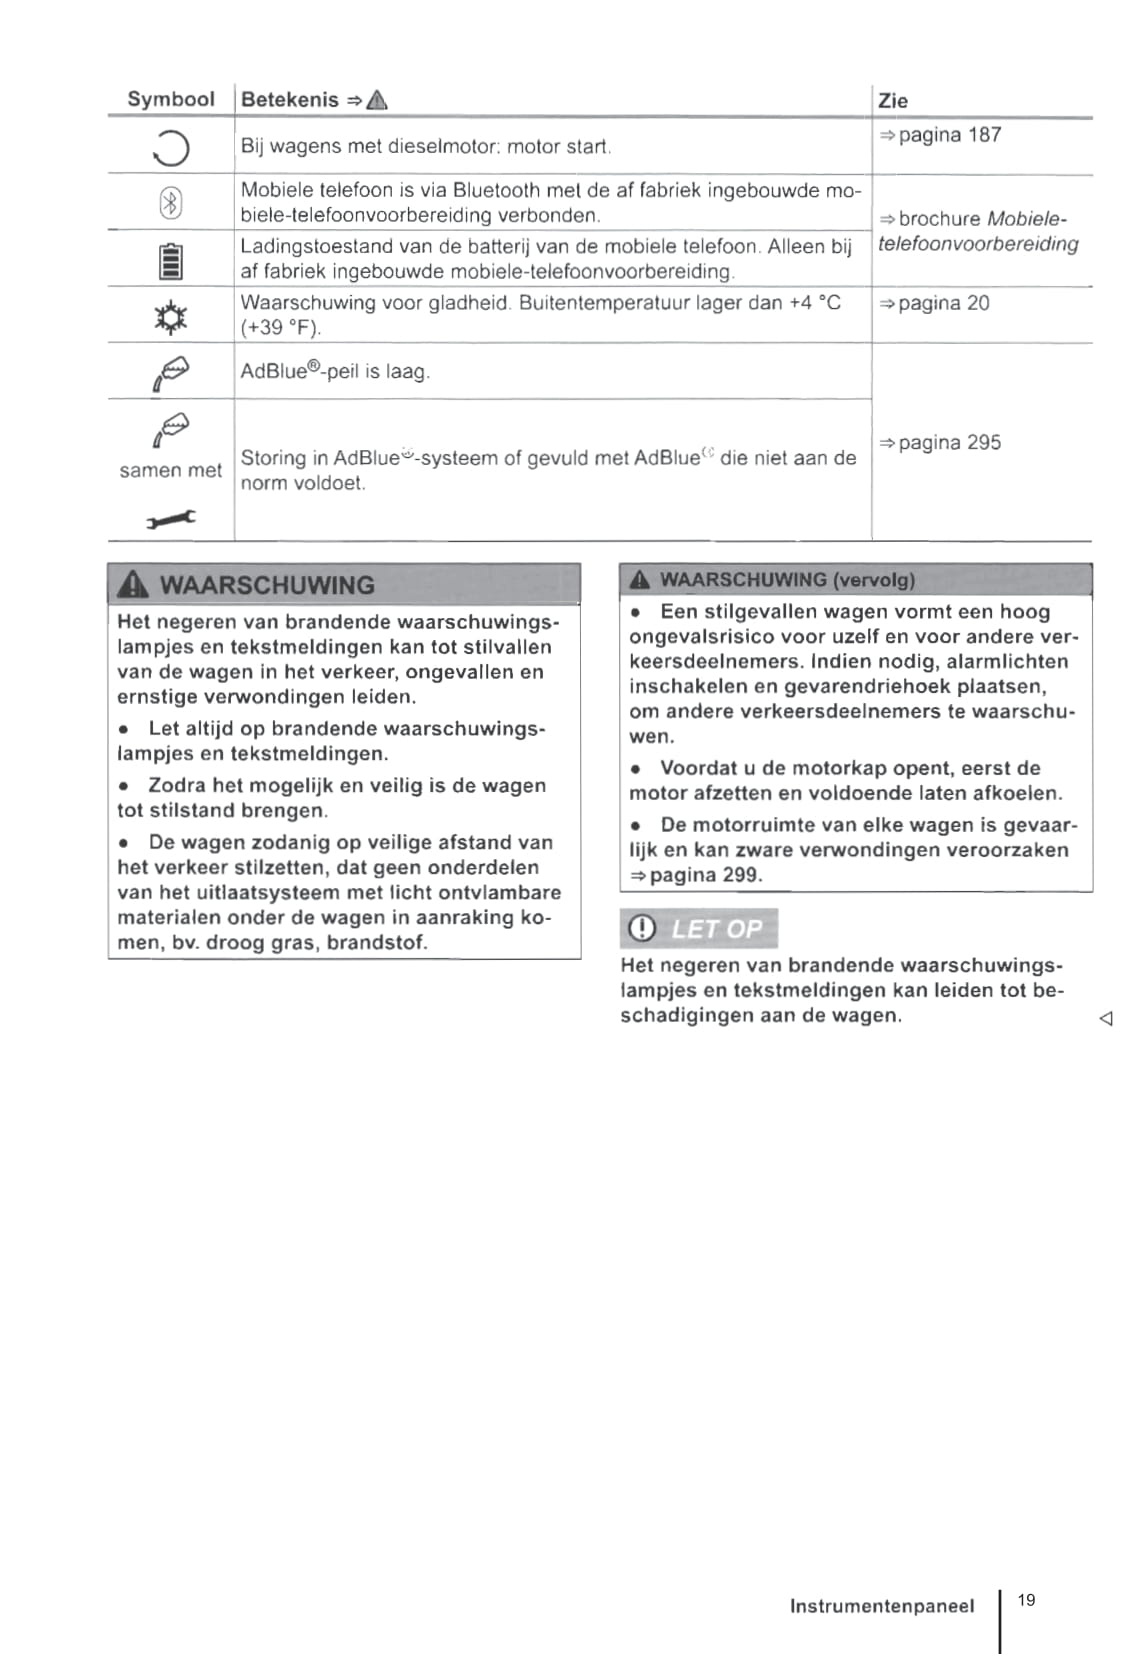 2015-2020 Volkswagen Caddy Owner's Manual | Dutch